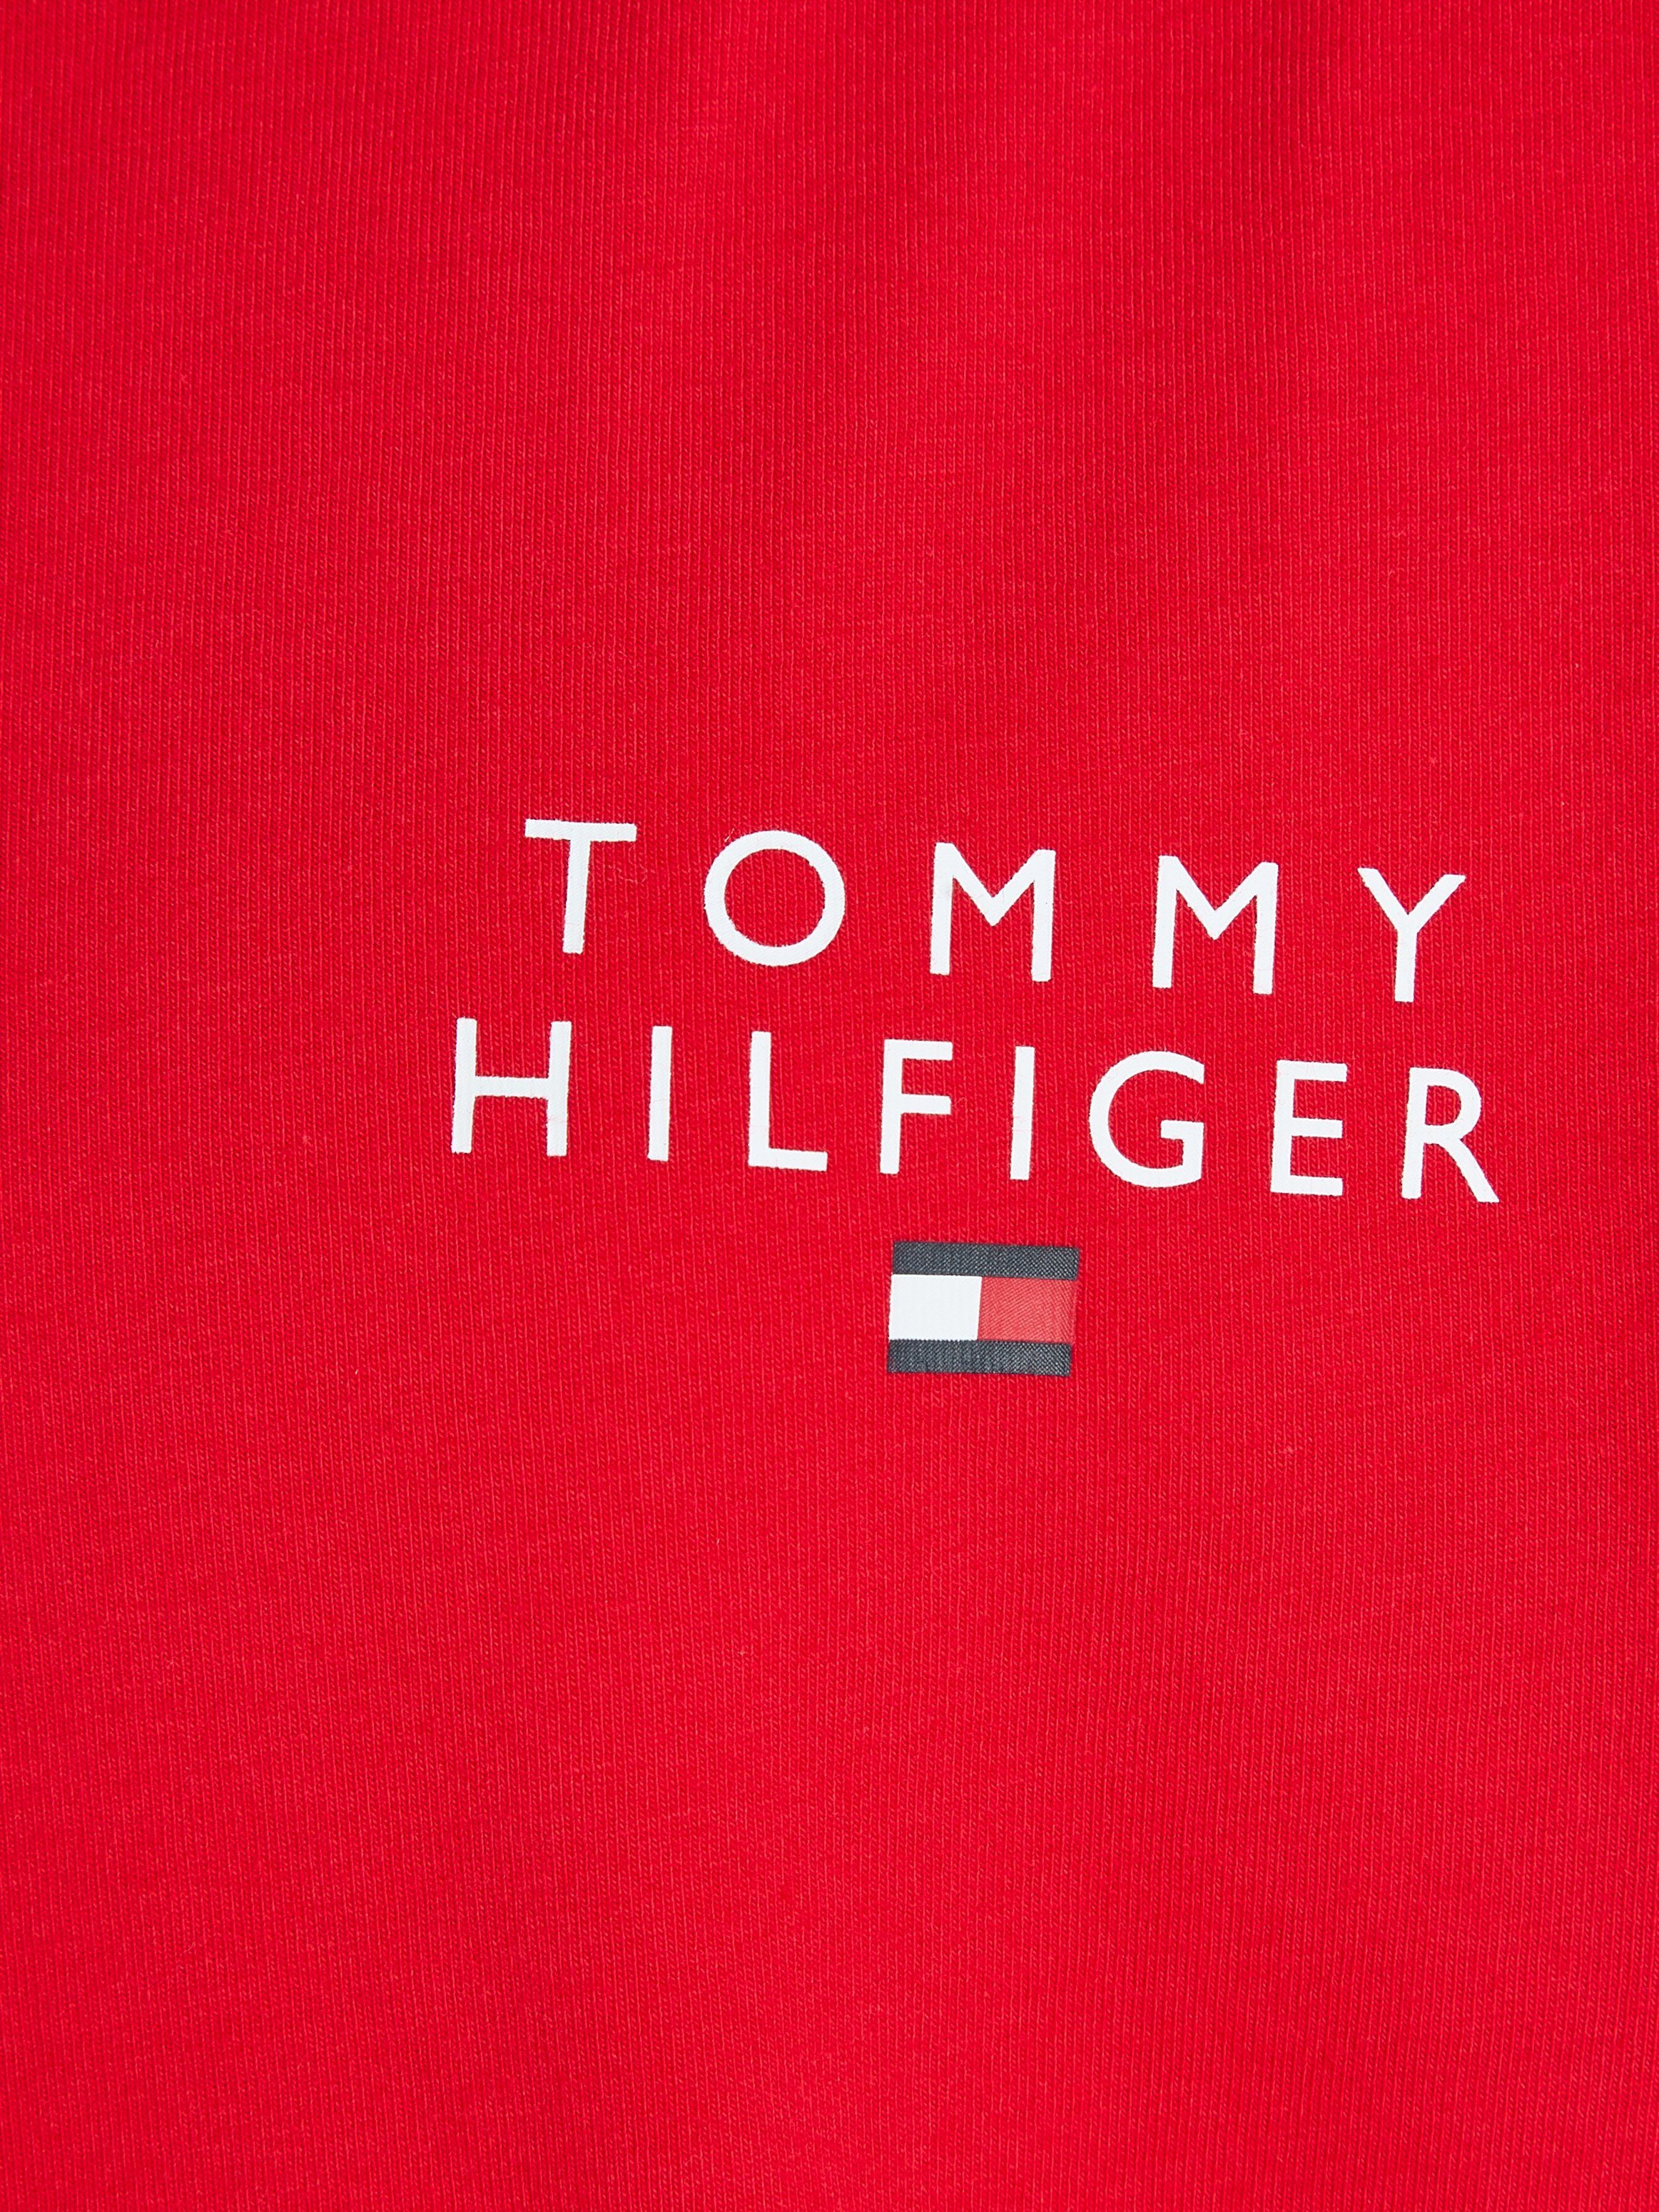 mit Tommy PJ Underwear Schlafanzug Hilfiger LONG SET (2 LS Branding Hilfiger PRINT Tommy PANTS tlg)